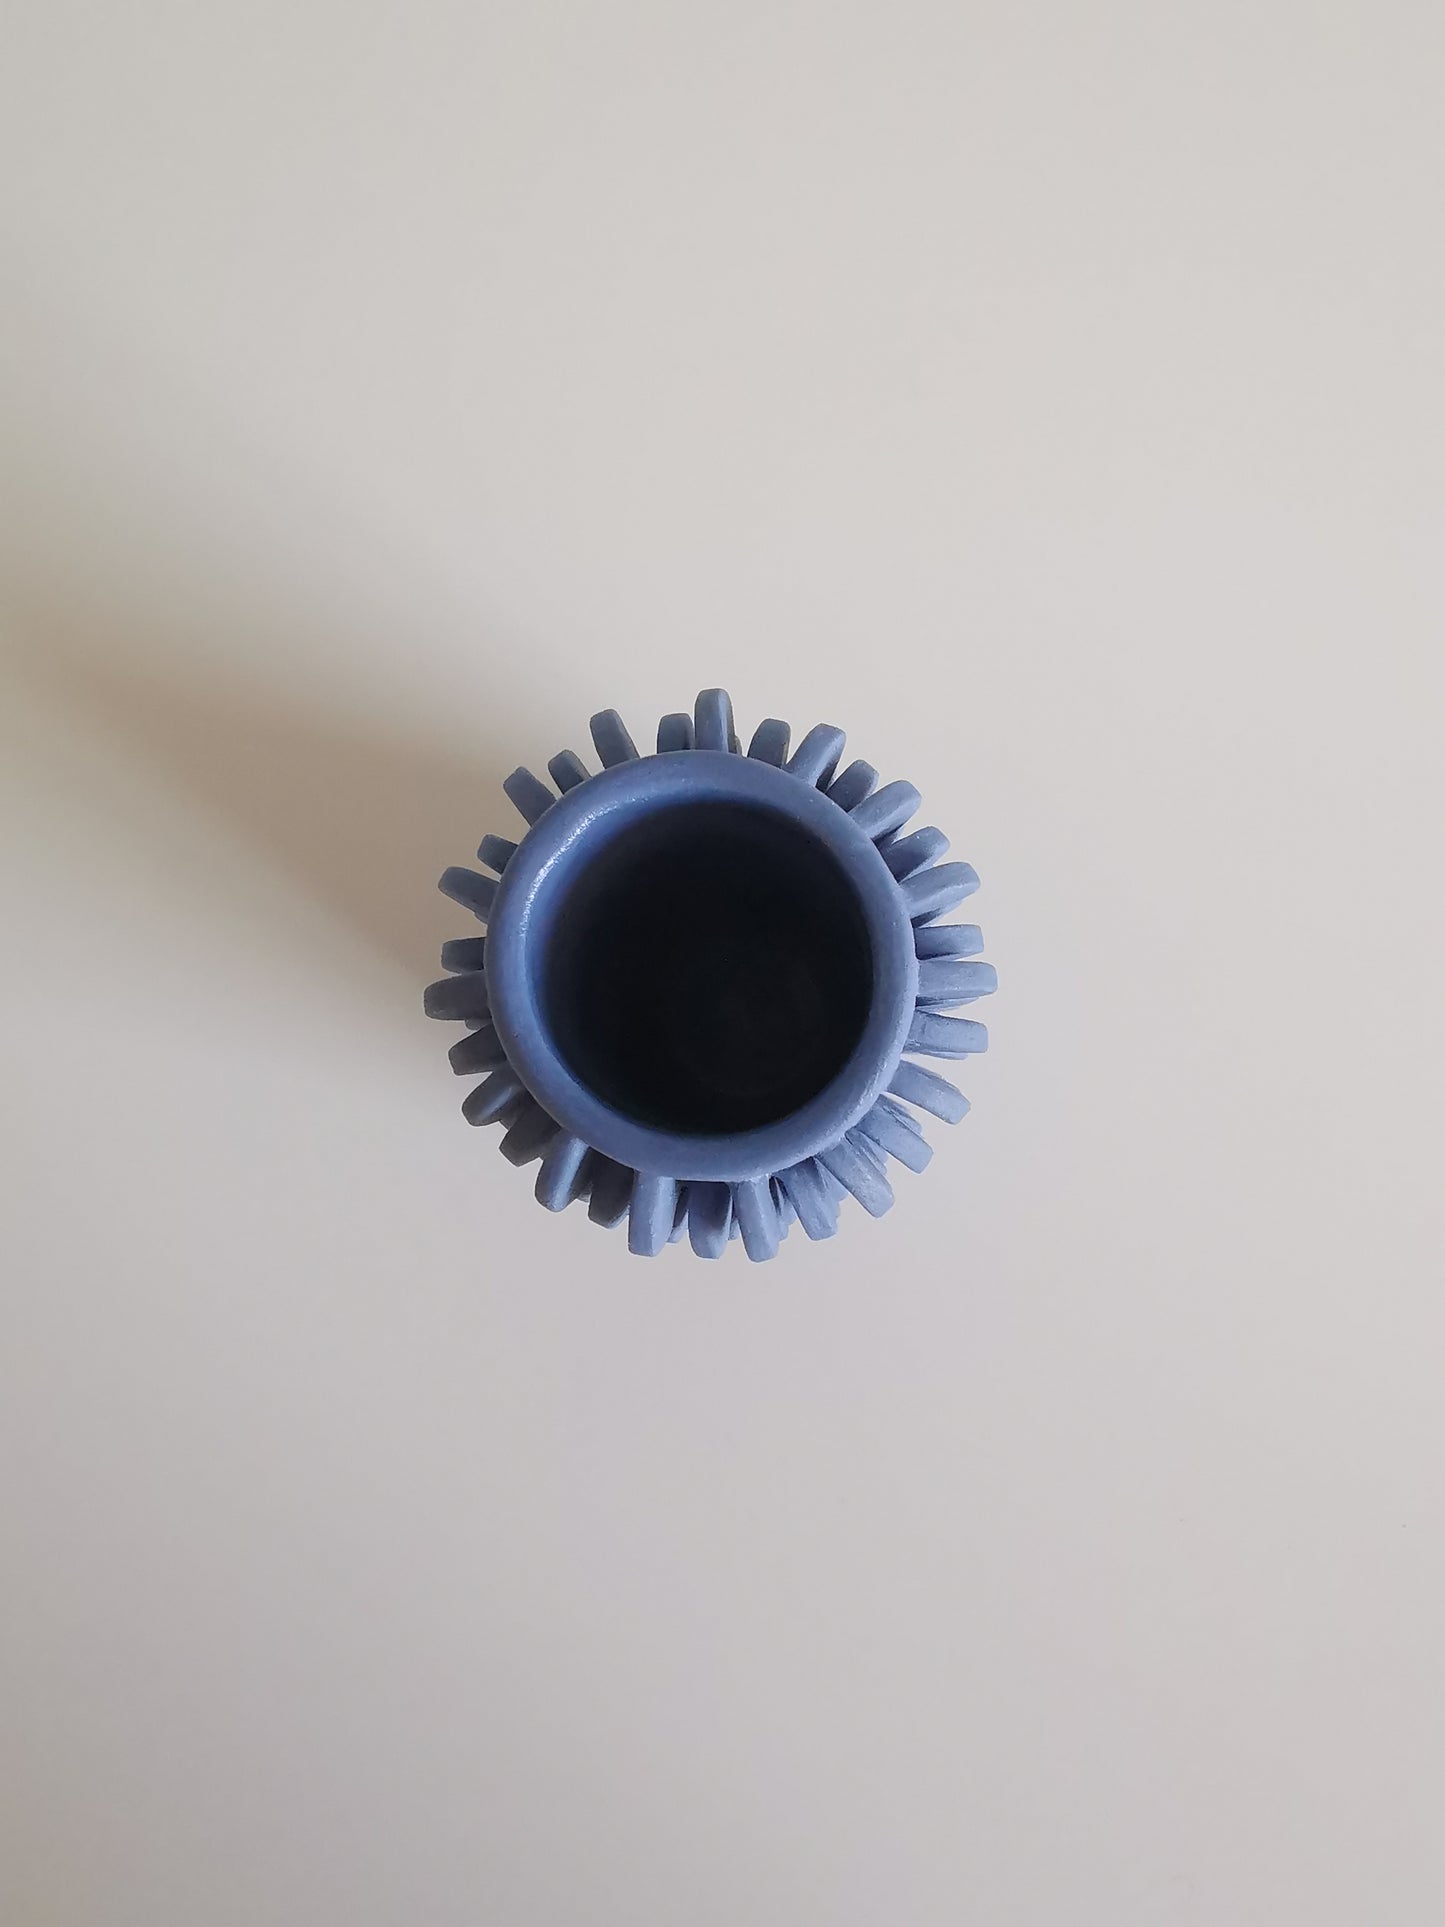 Mini Royal Blue Vase with Disks